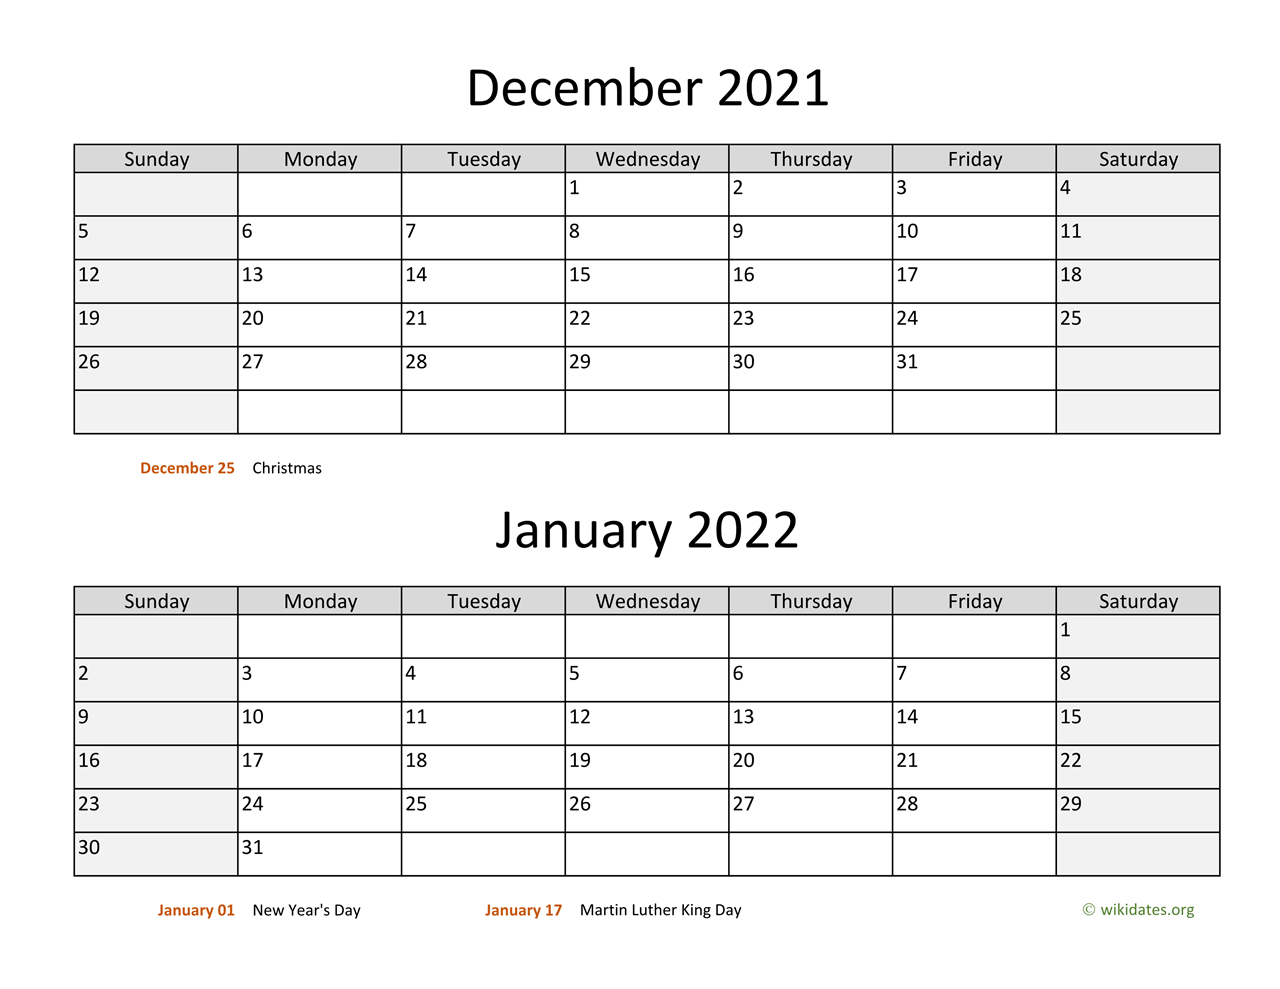 December And January Calendar 2022 December 2021 And January 2022 Calendar | Wikidates.org